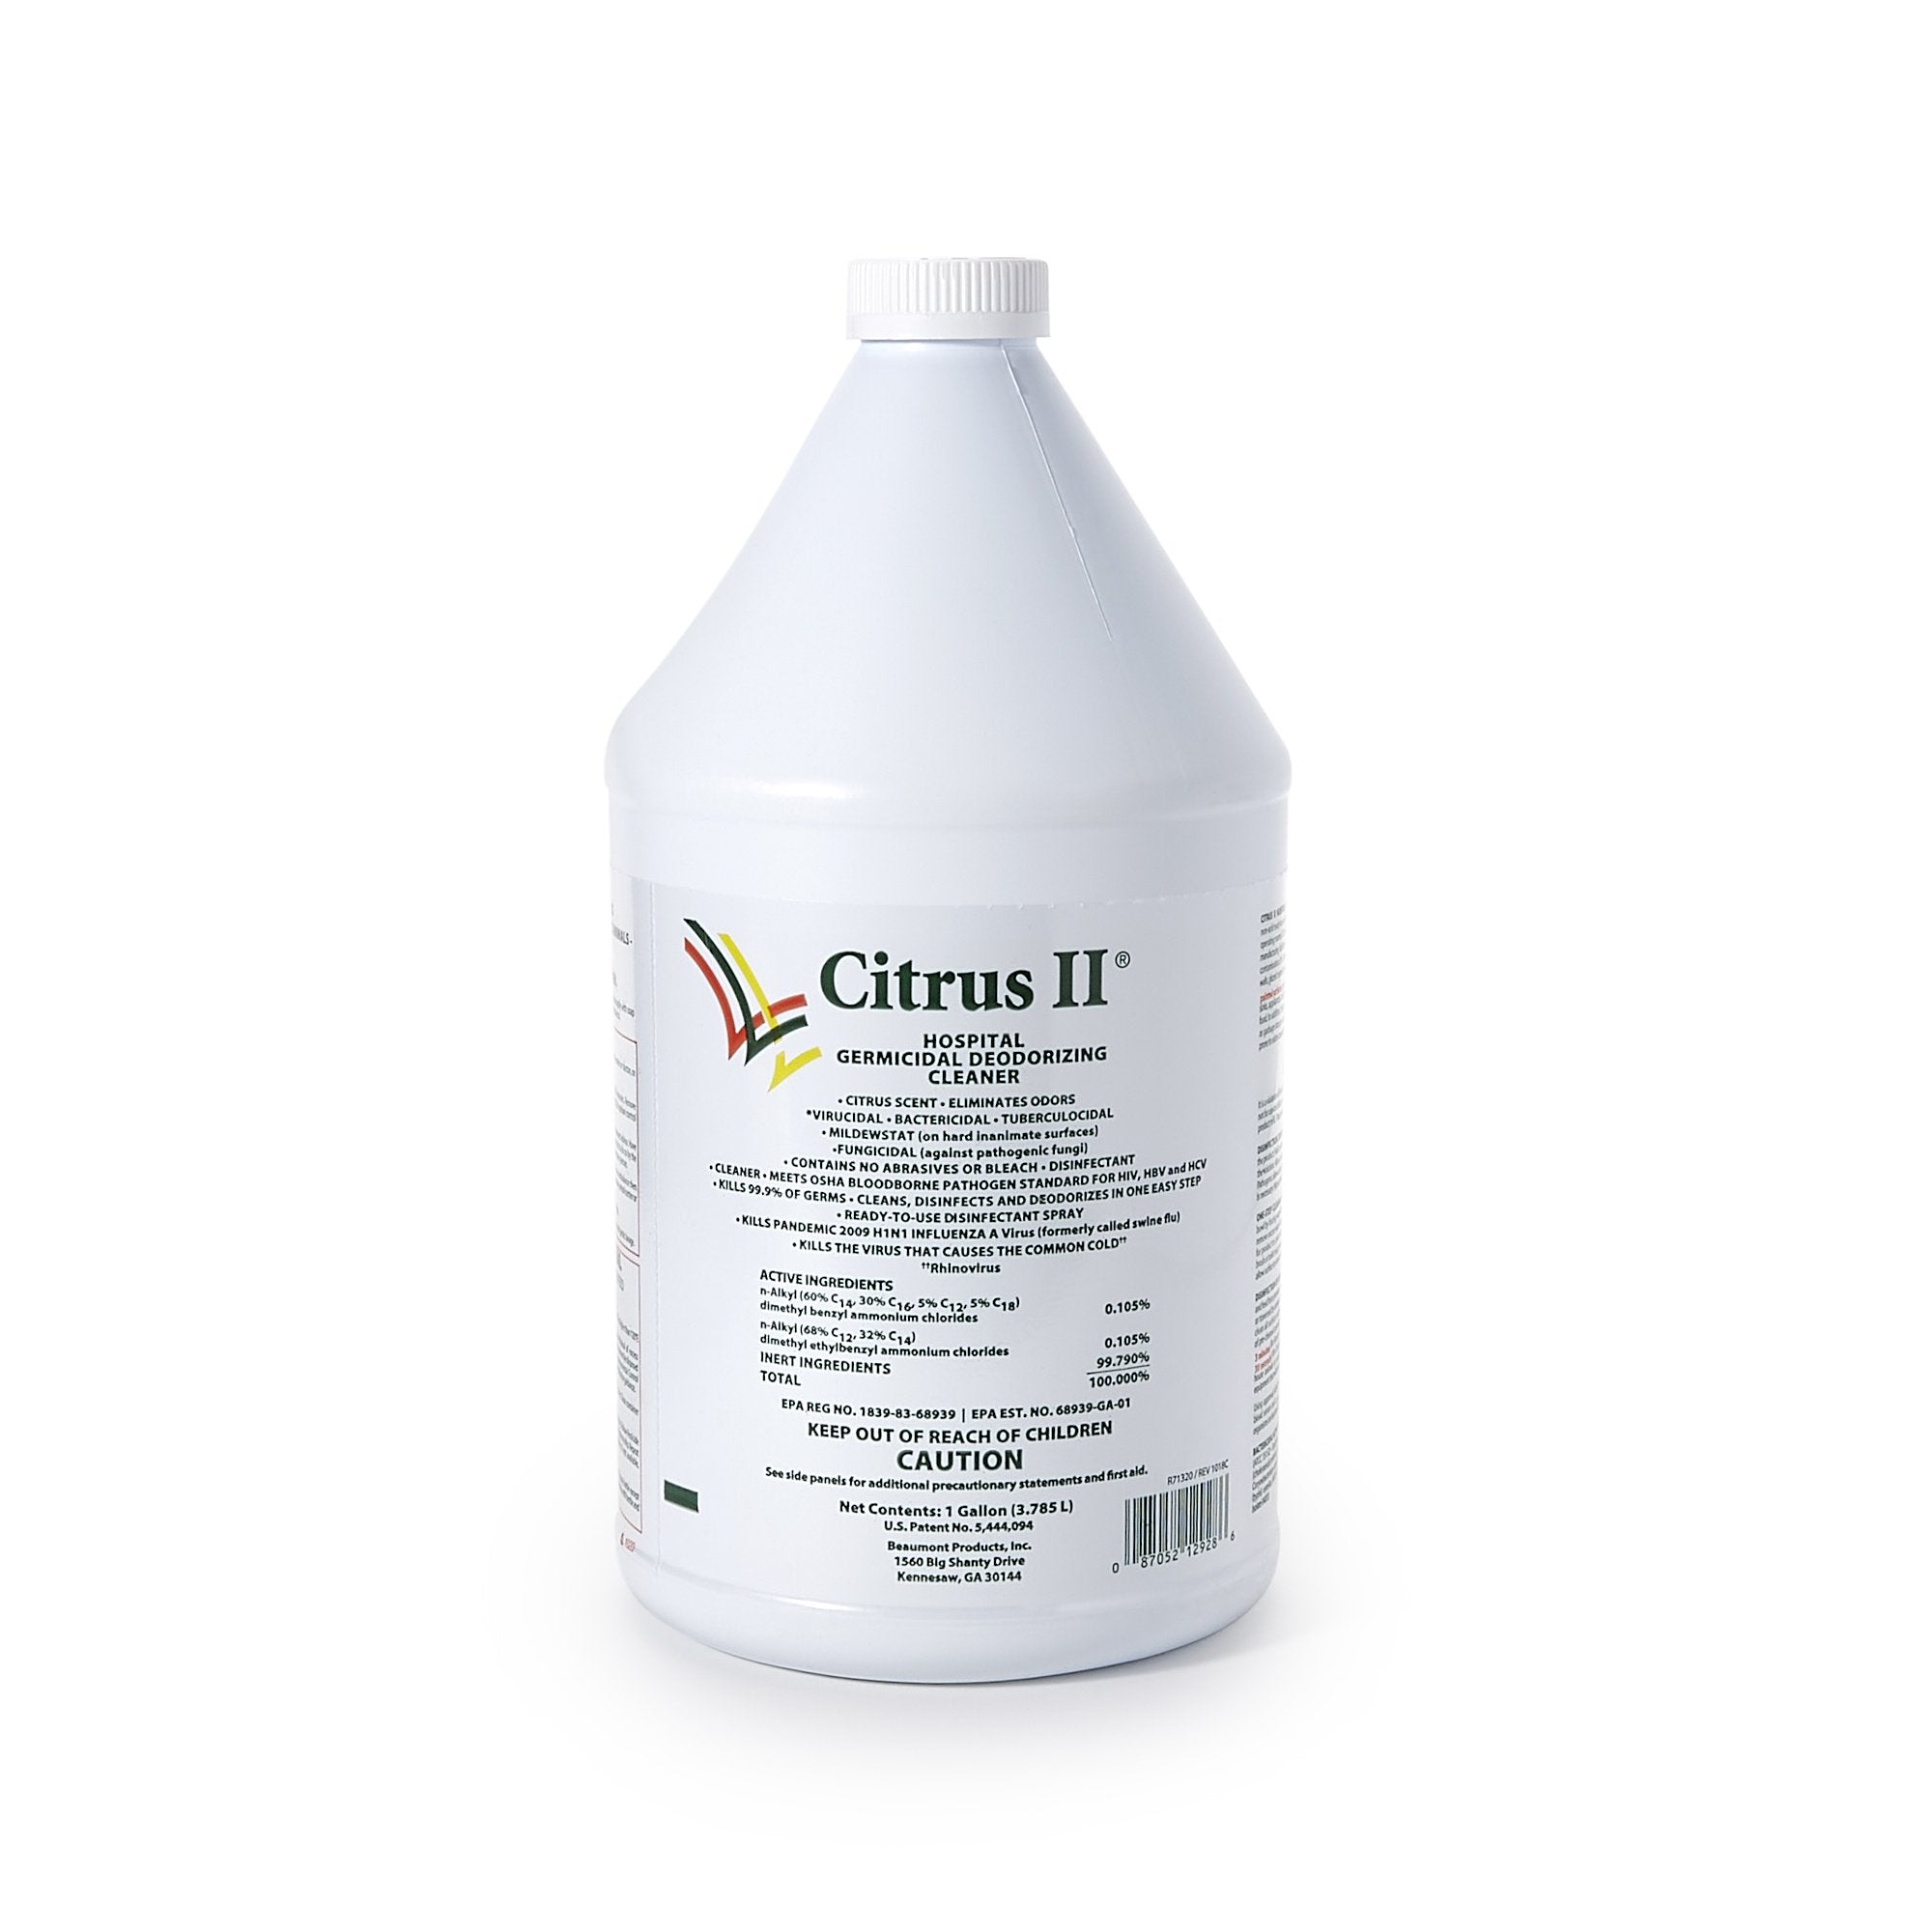 Citrus II Surface Disinfectant Cleaner Quaternary Based Manual Pour Liquid 1 gal. Jug Citrus Scent NonSterile